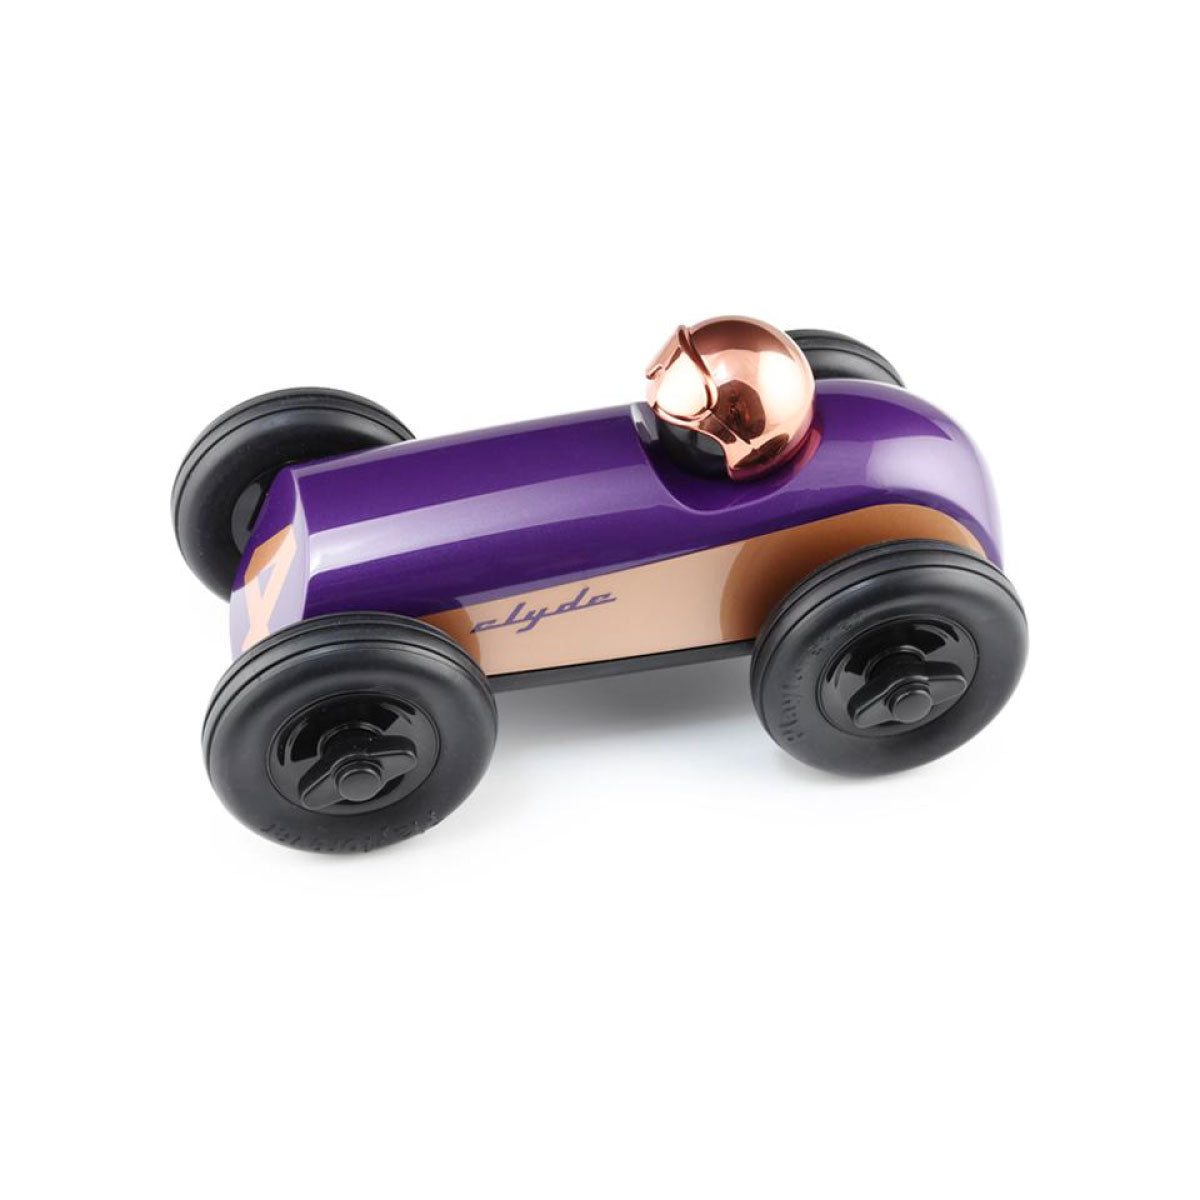 Playforever Radio (Purple & Copper) Clyde Race Car